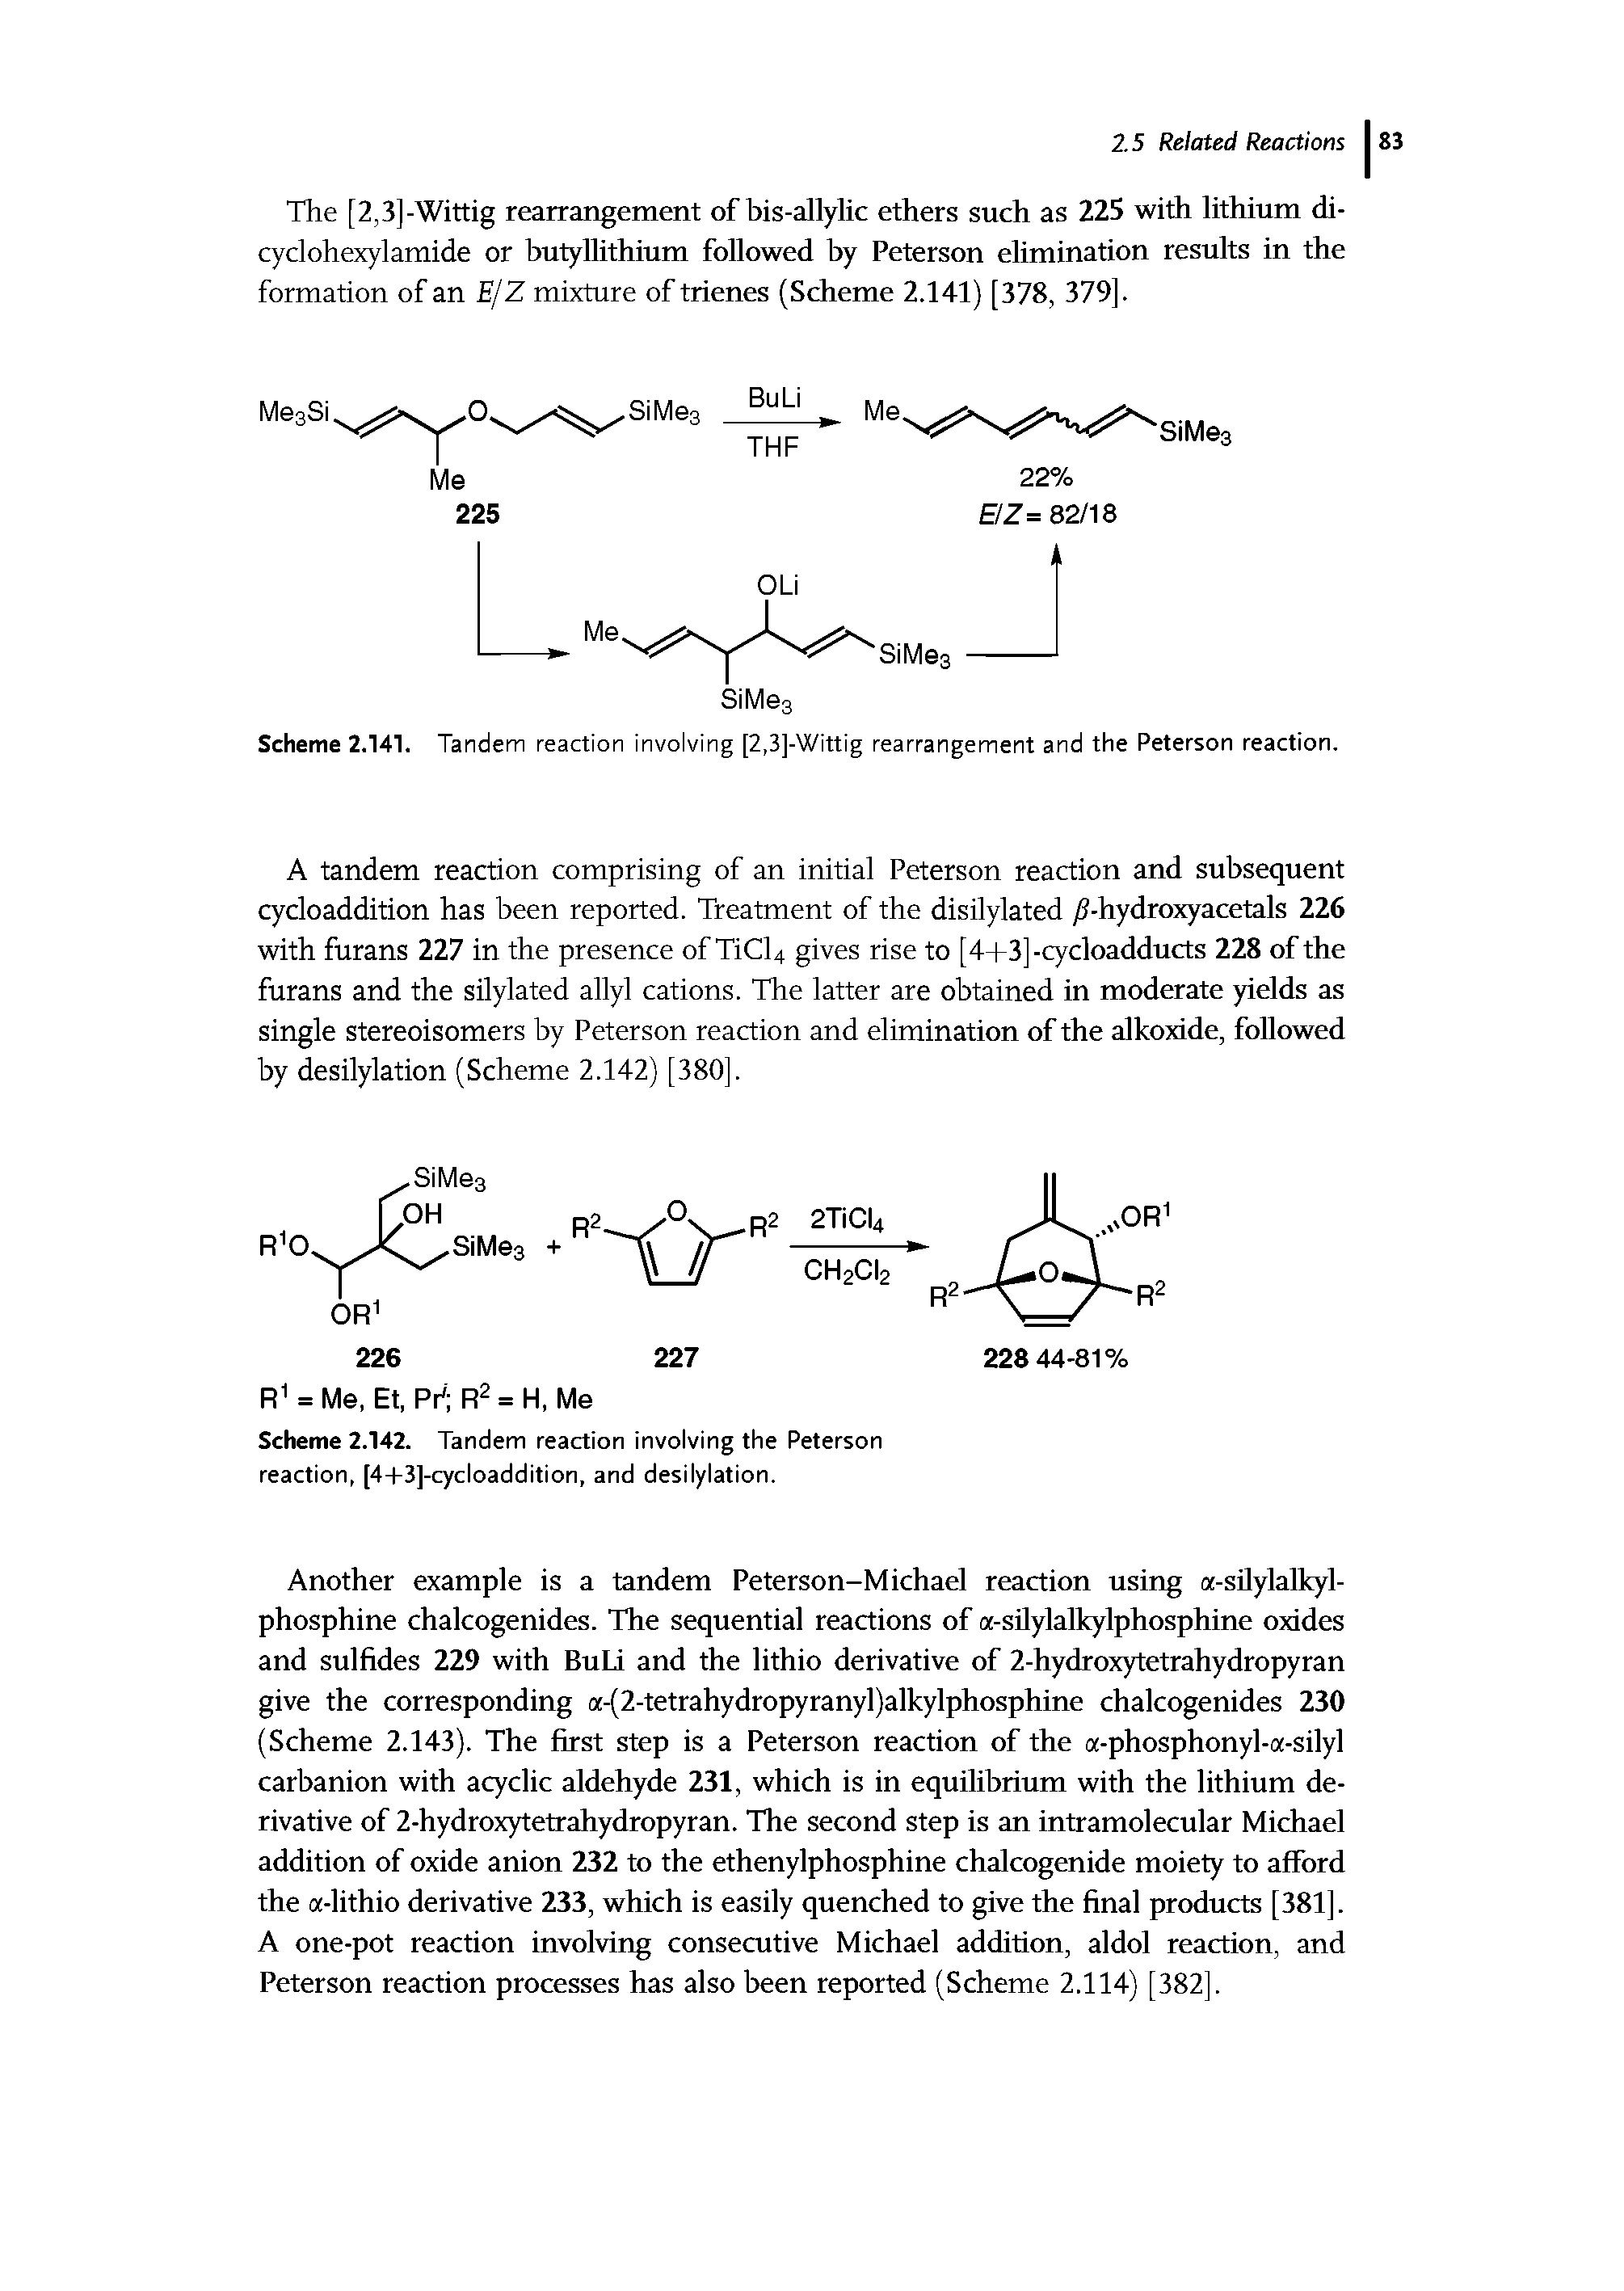 Scheme 2.141. Tandem reaction involving [2,3]-Wittig rearrangement and the Peterson reaction.